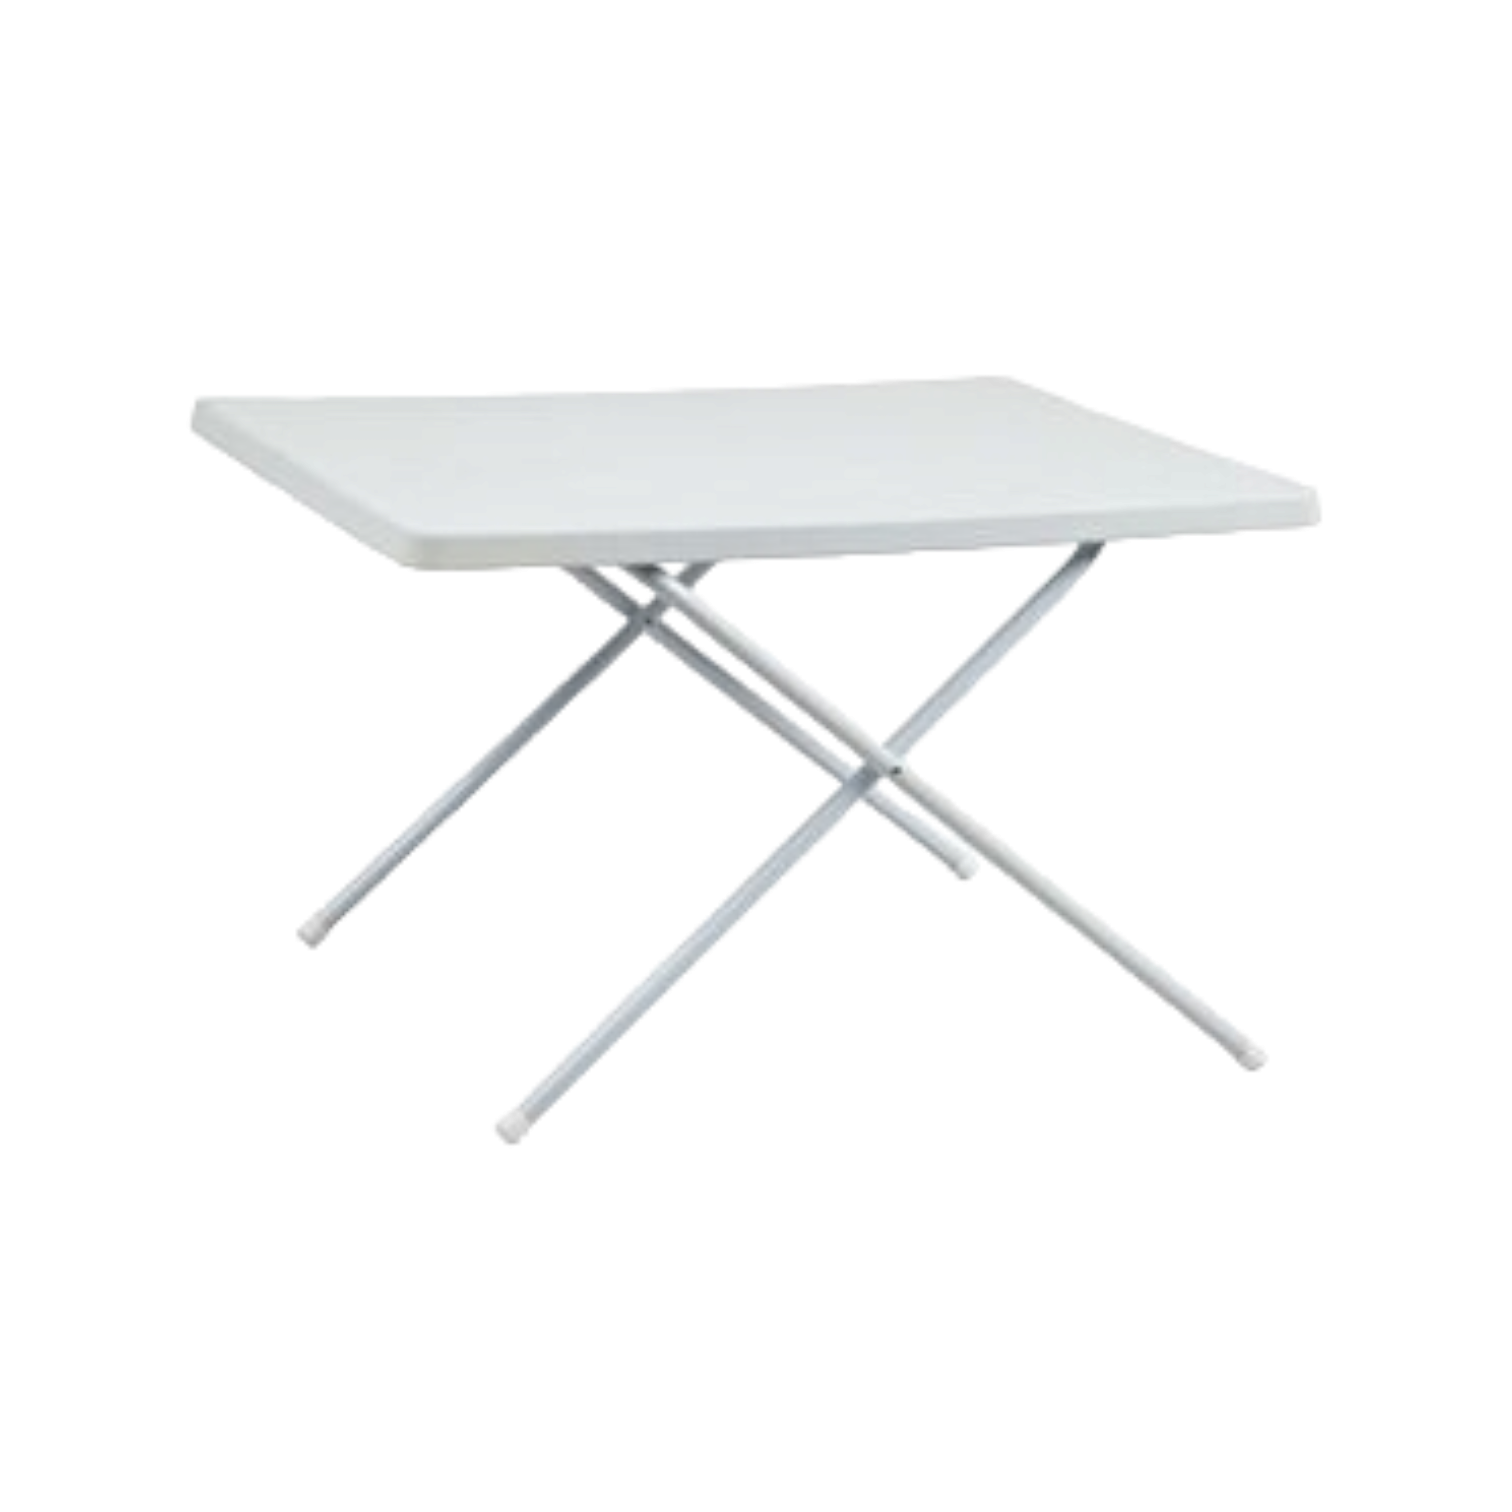 Camp Master Adjustable Table 79x59cm